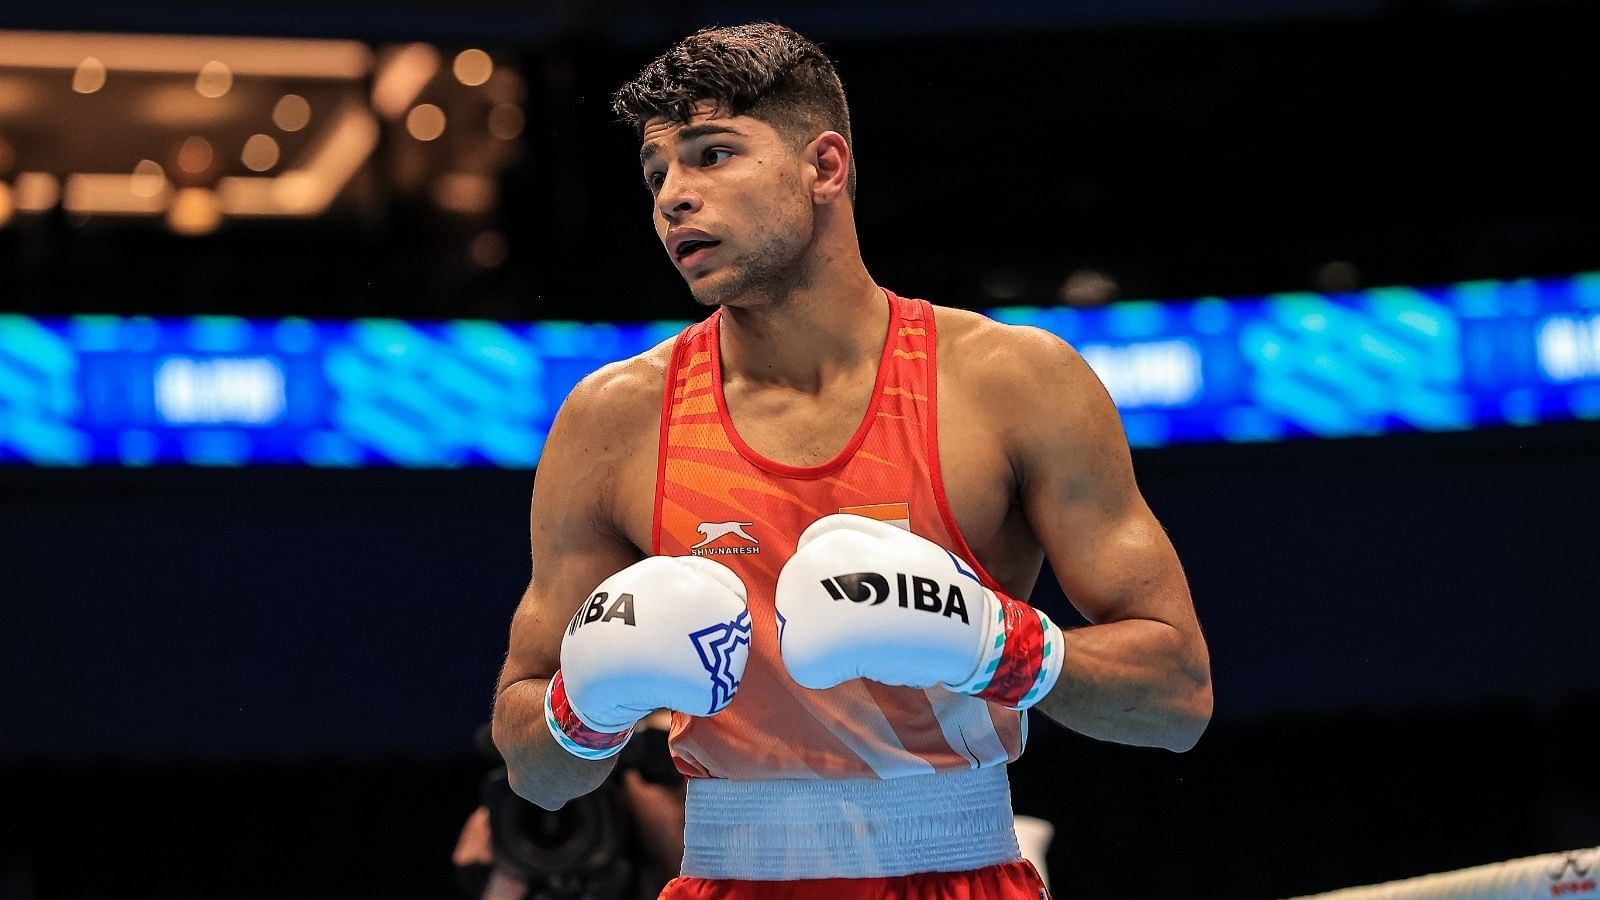 <div class="paragraphs"><p>India's Nishant Dev moves closer to Paris 2024 quota as he advances to quarters at 1st World Olympic Boxing Qualifier.</p></div>